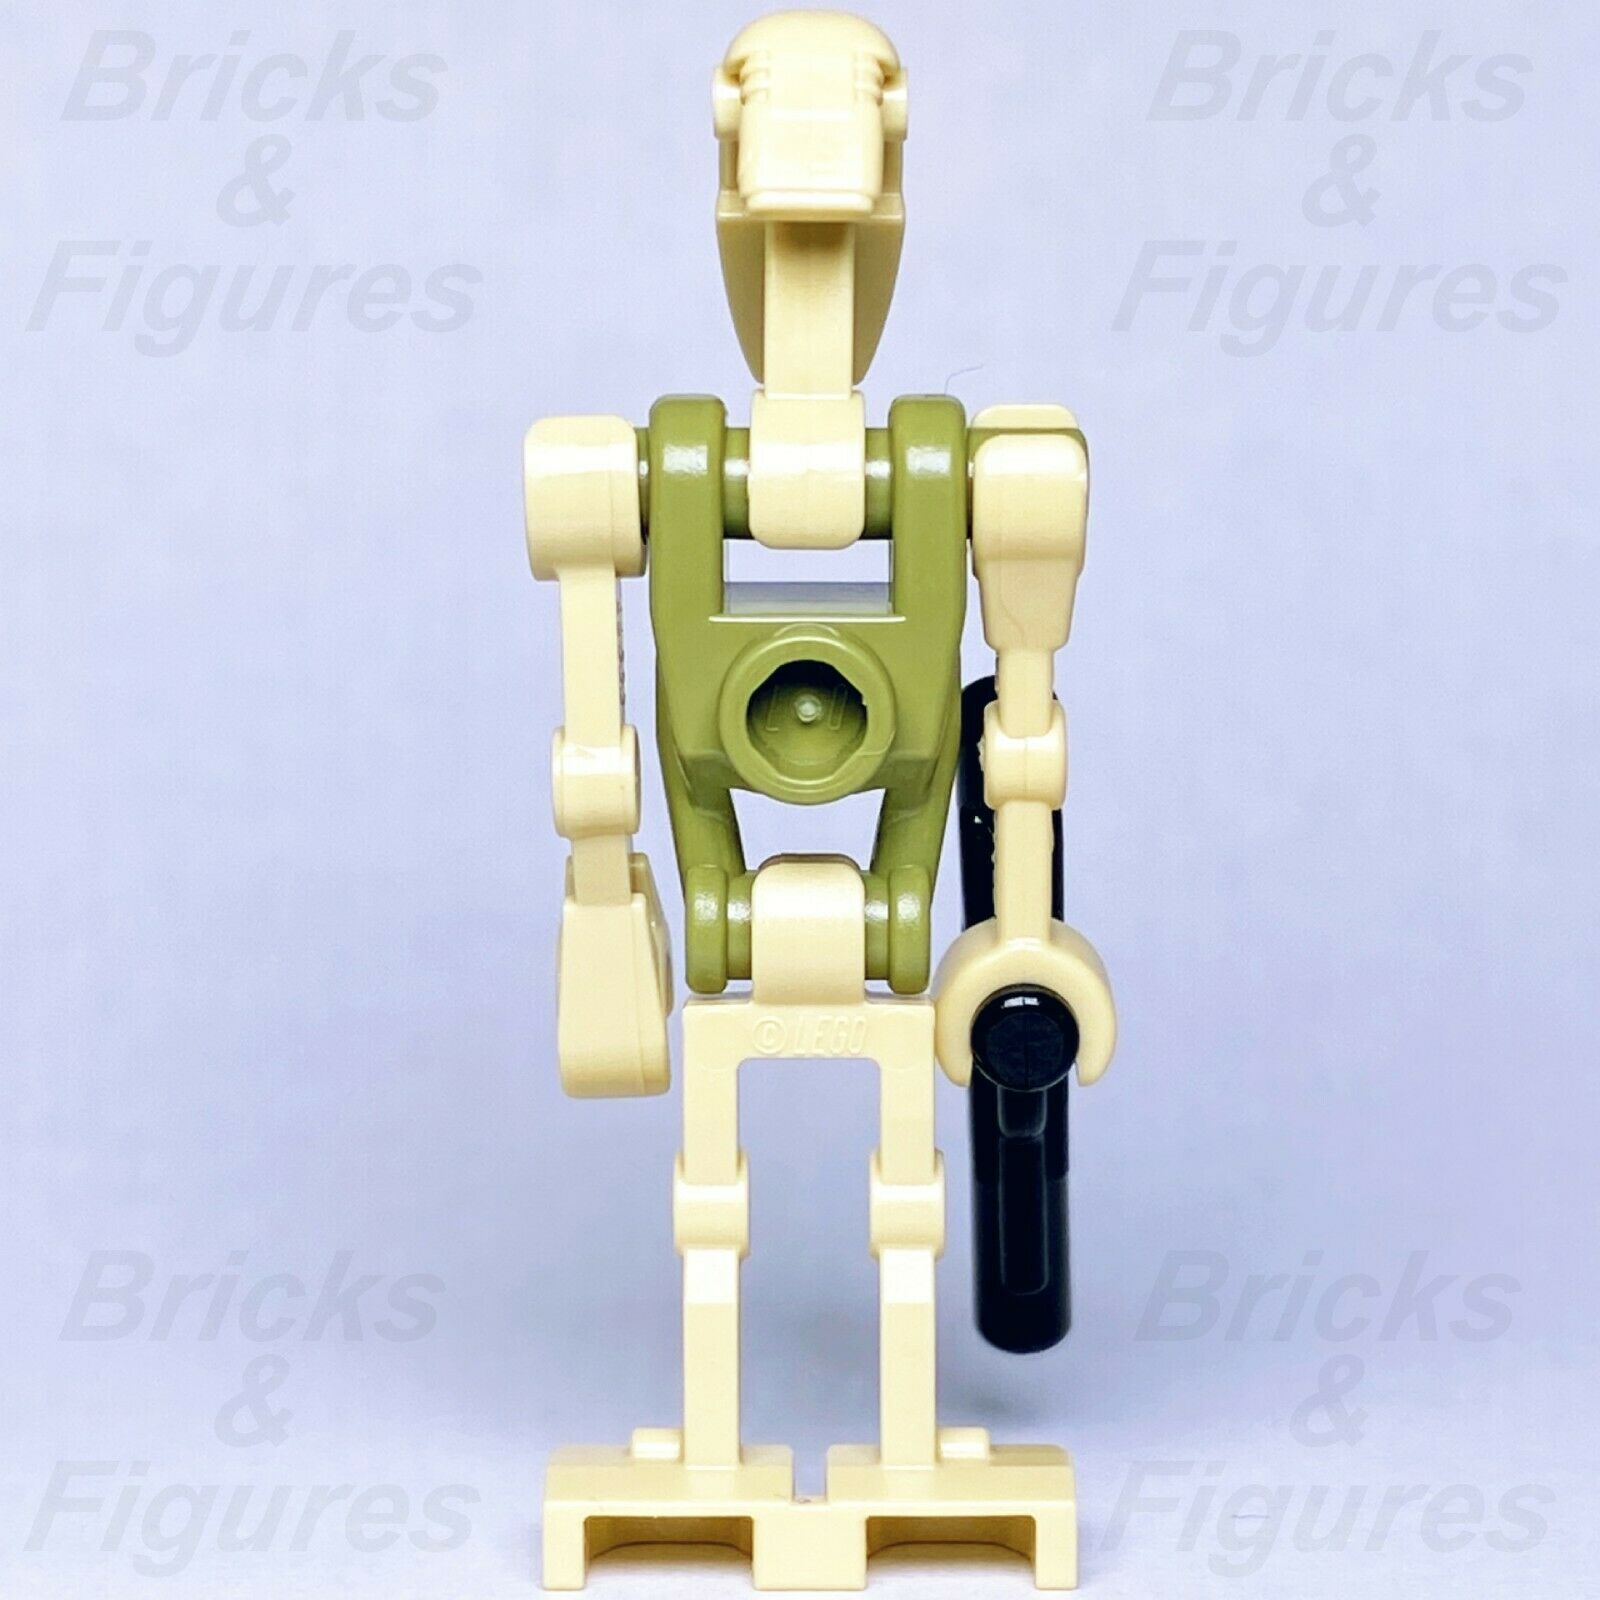 LEGO® Star Wars - Kashyyyk Battle Droid from 75234 - The Brick People